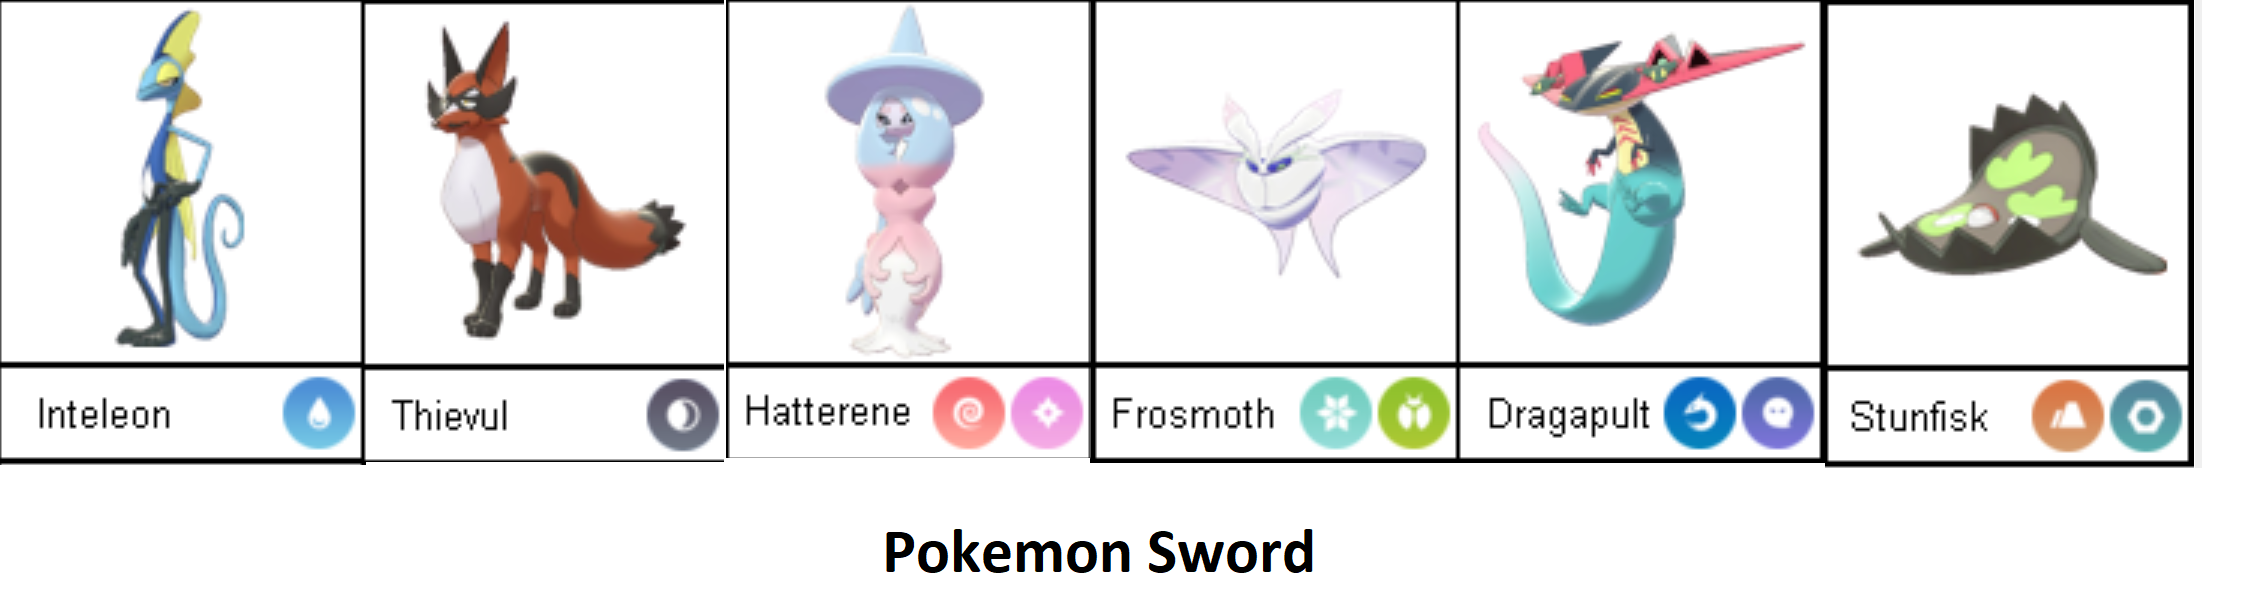 Pokemon Sword Team.png